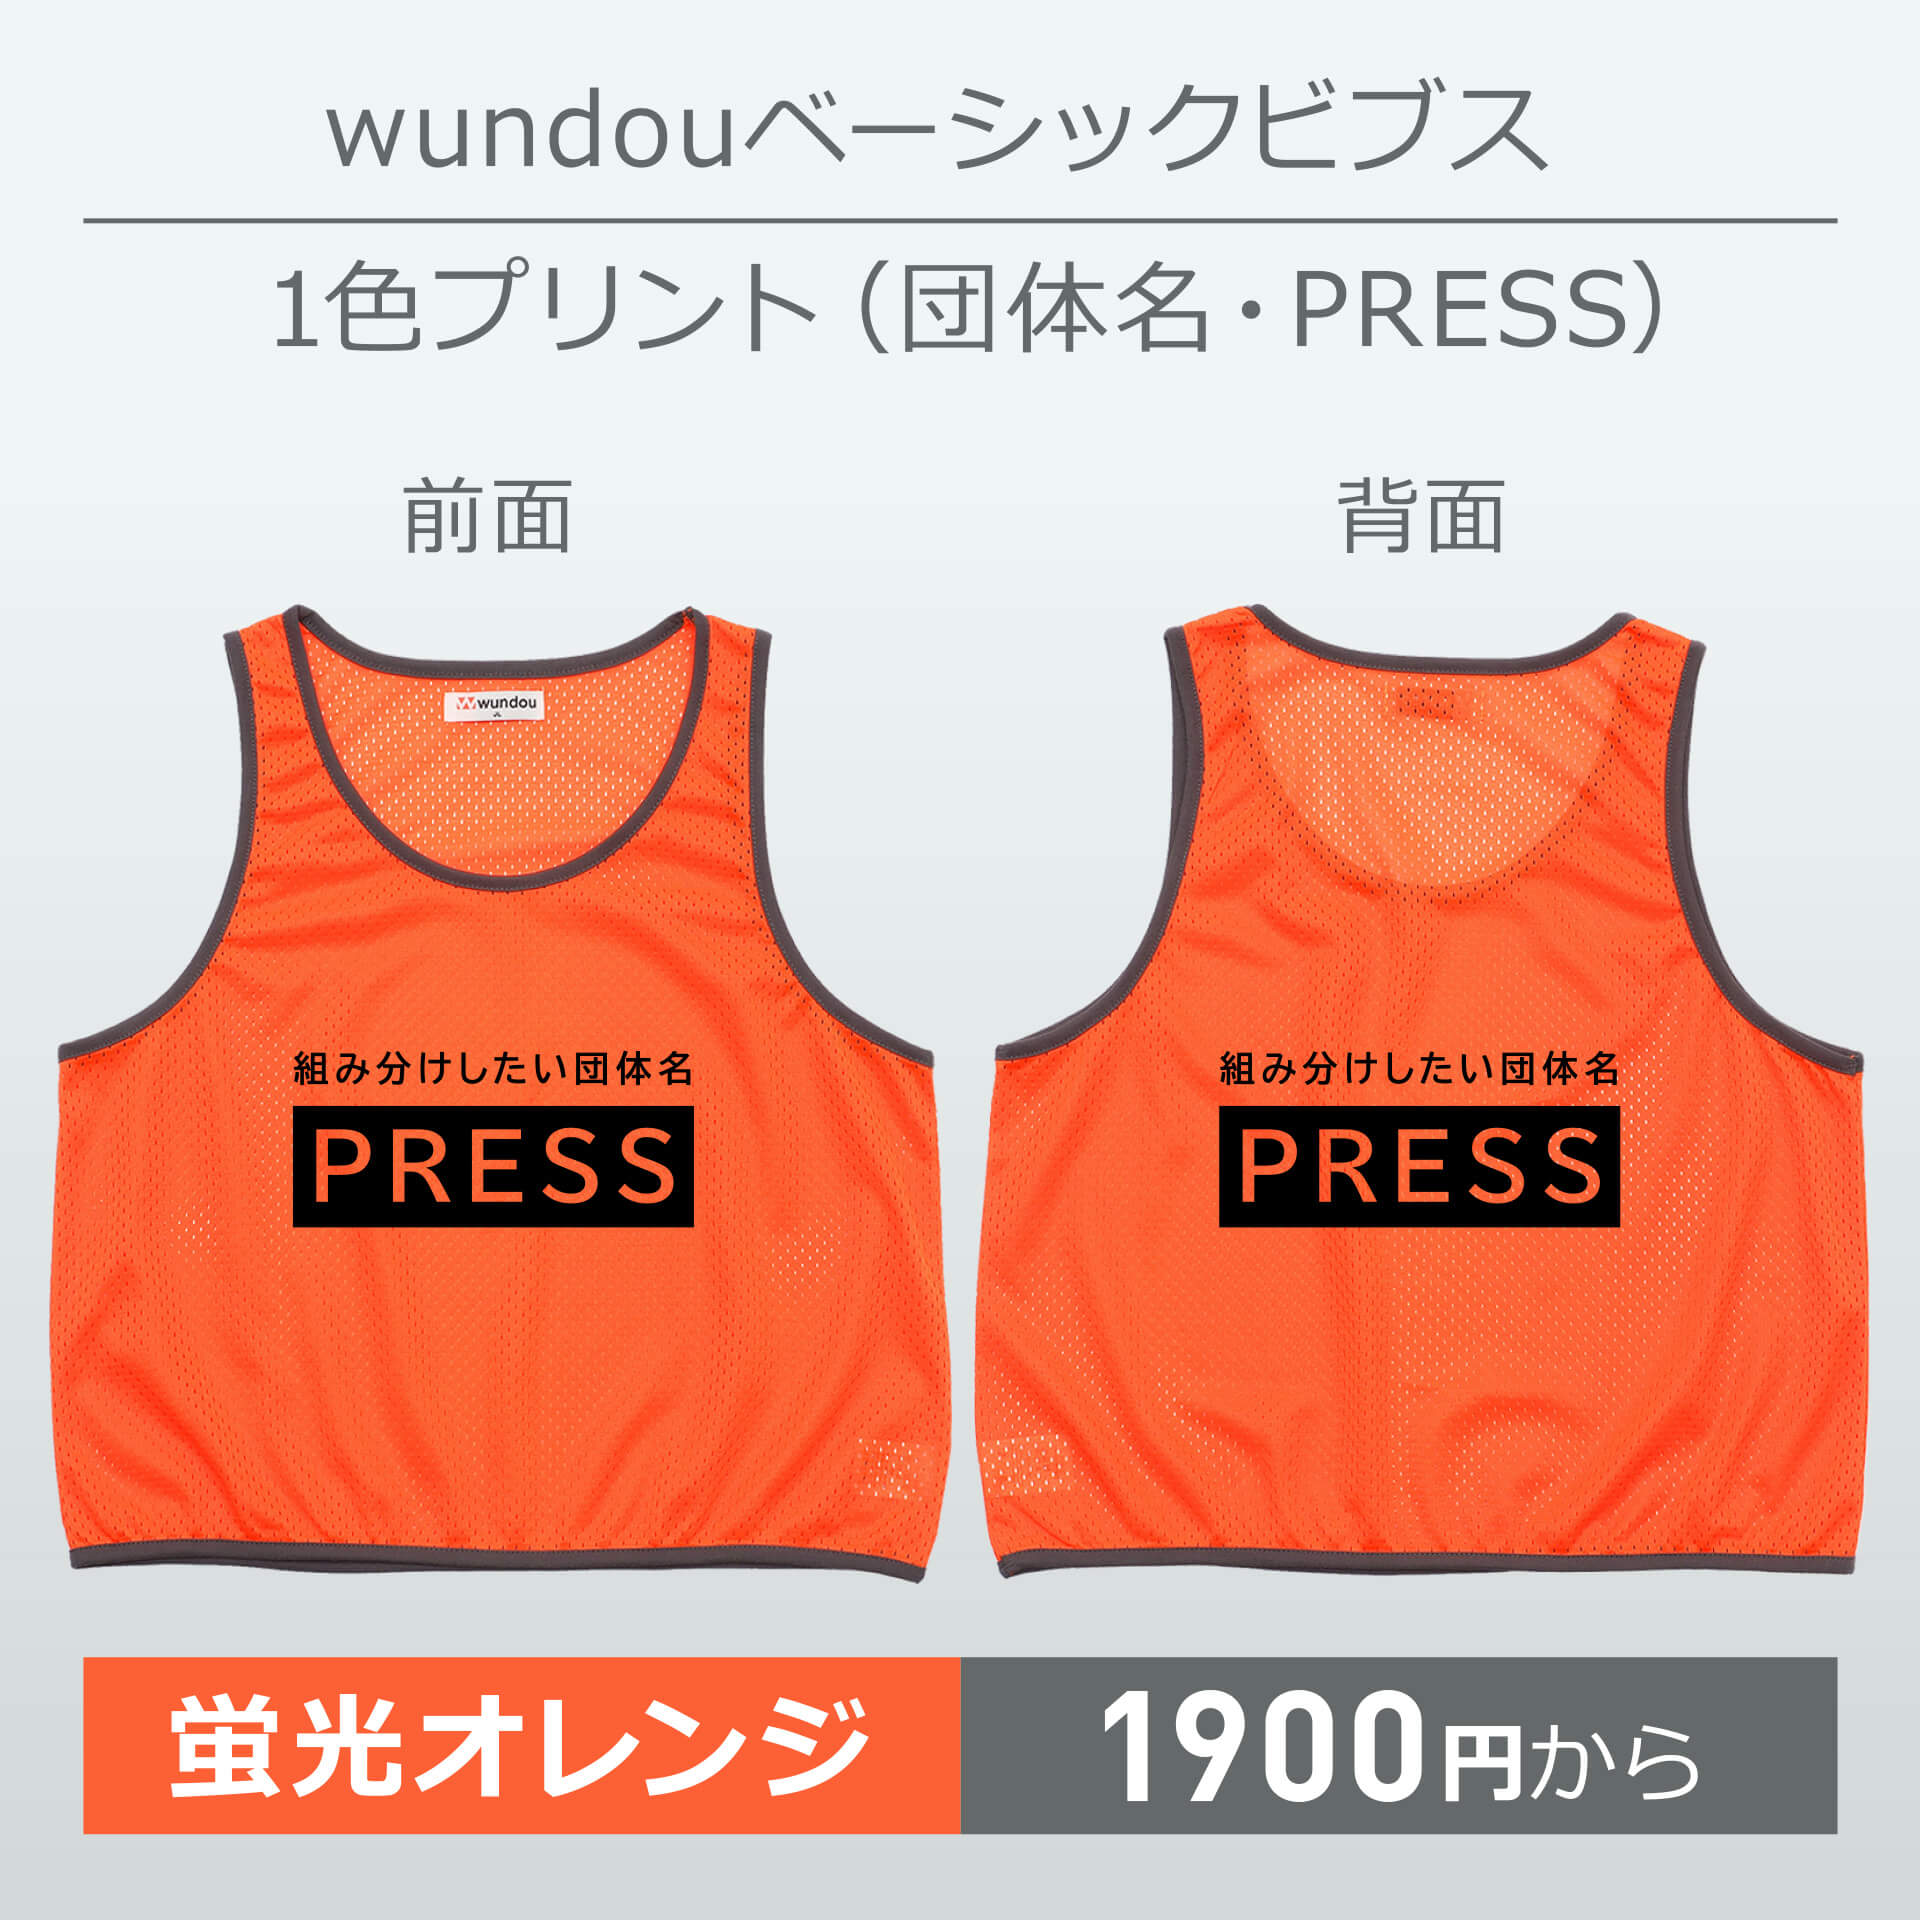 wundou・ベーシックビブス・1色プリント(団体名・PRESS)・蛍光オレンジ